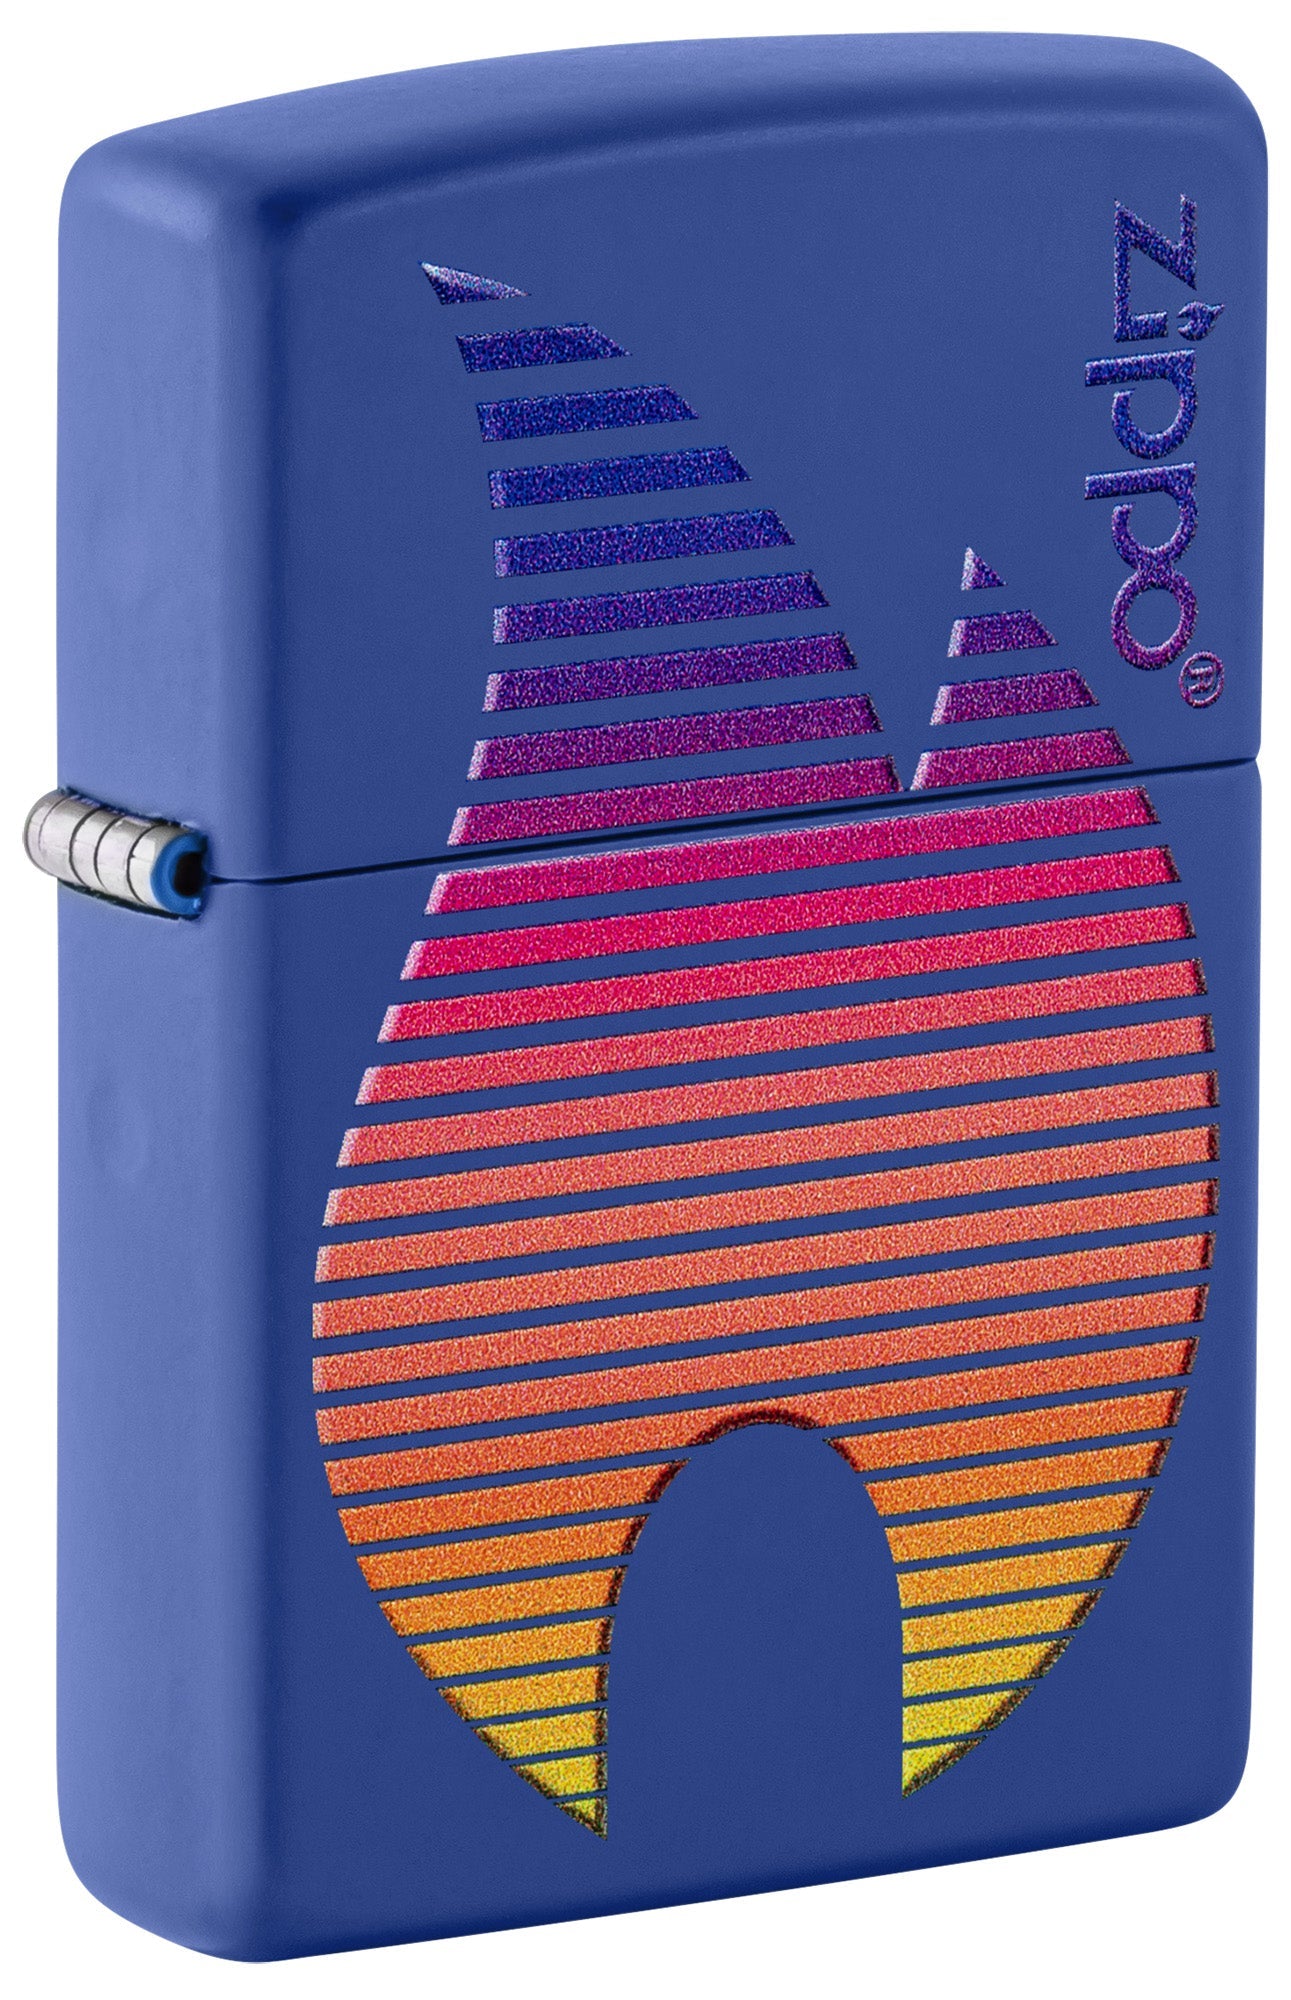 Zippo Lighter: Zippo Flame Design - Royal Blue Matte 48996